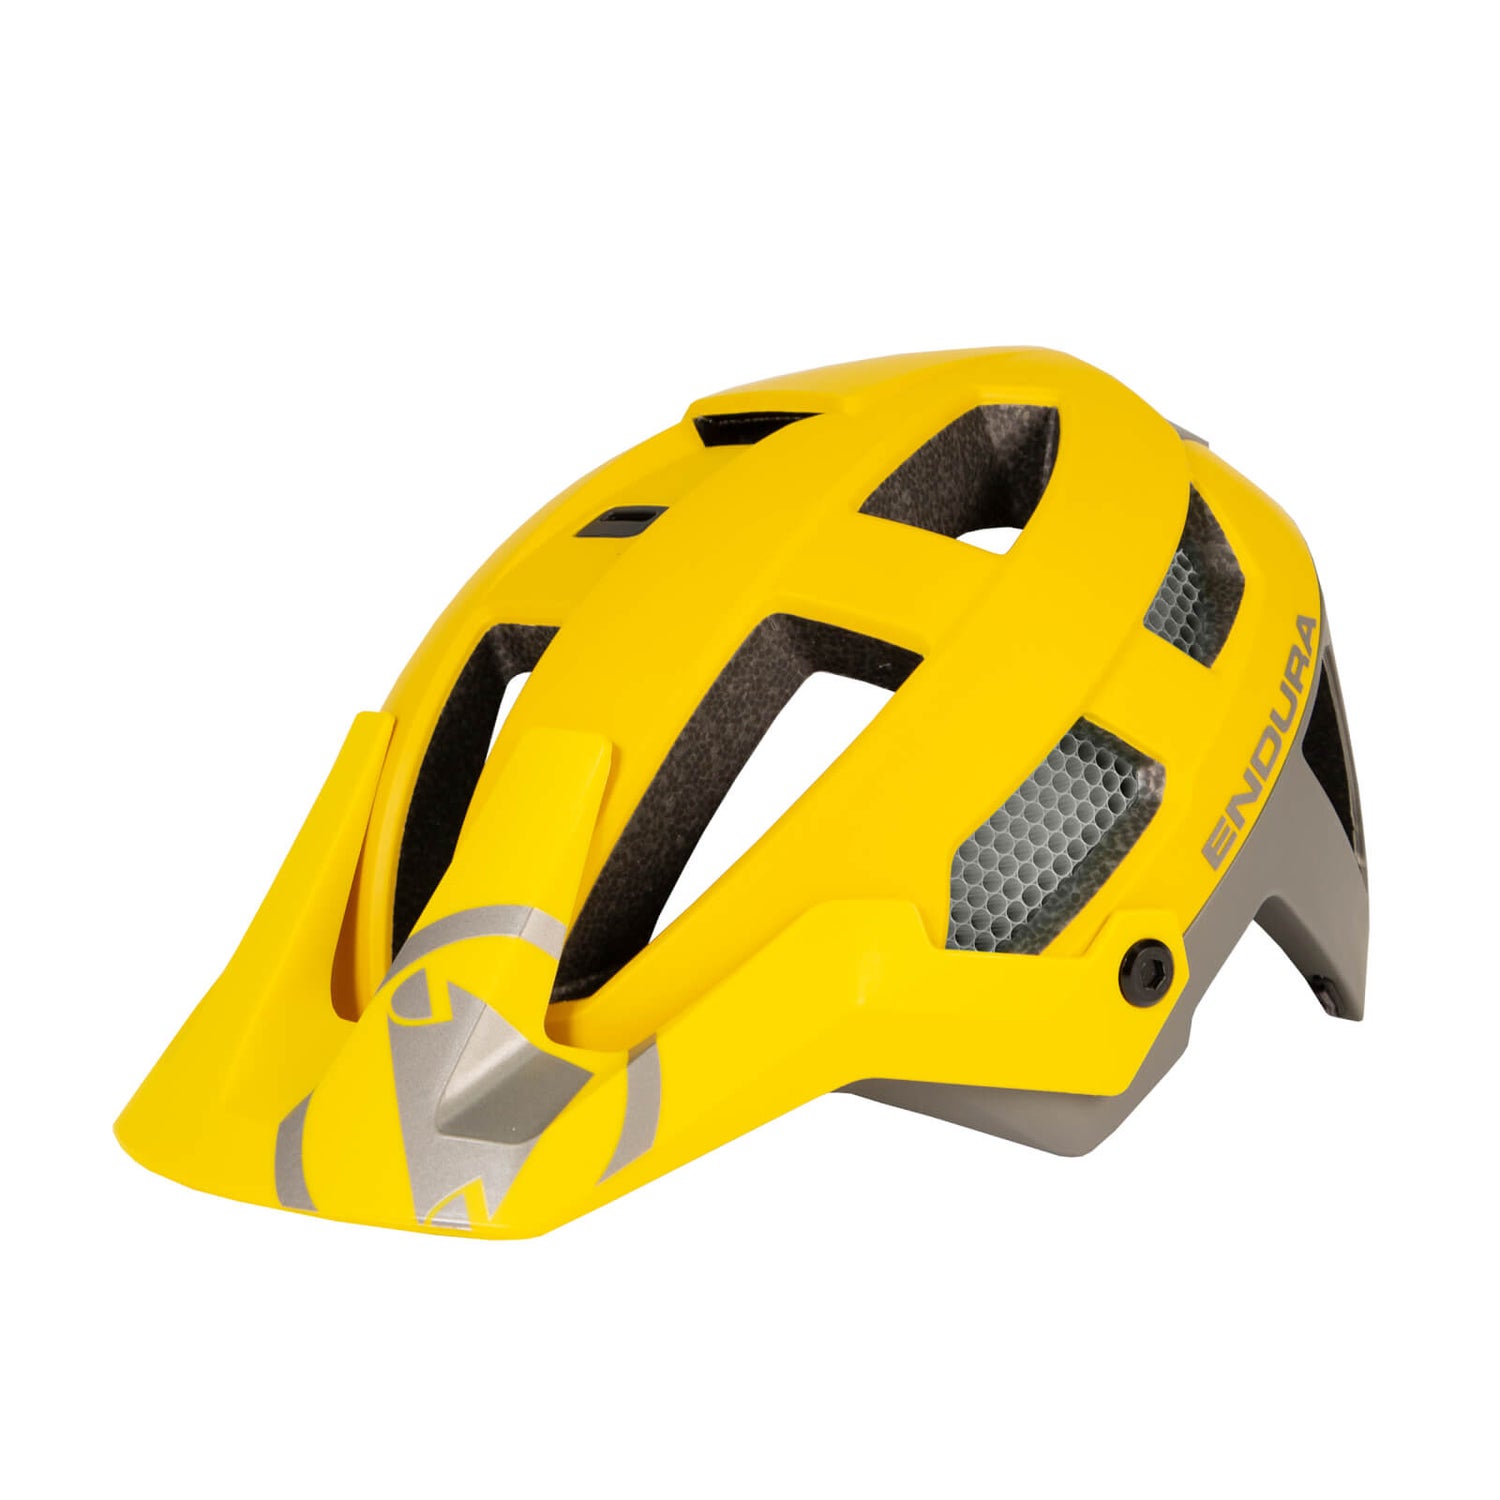 SingleTrack Helmet - Saffron - S-M